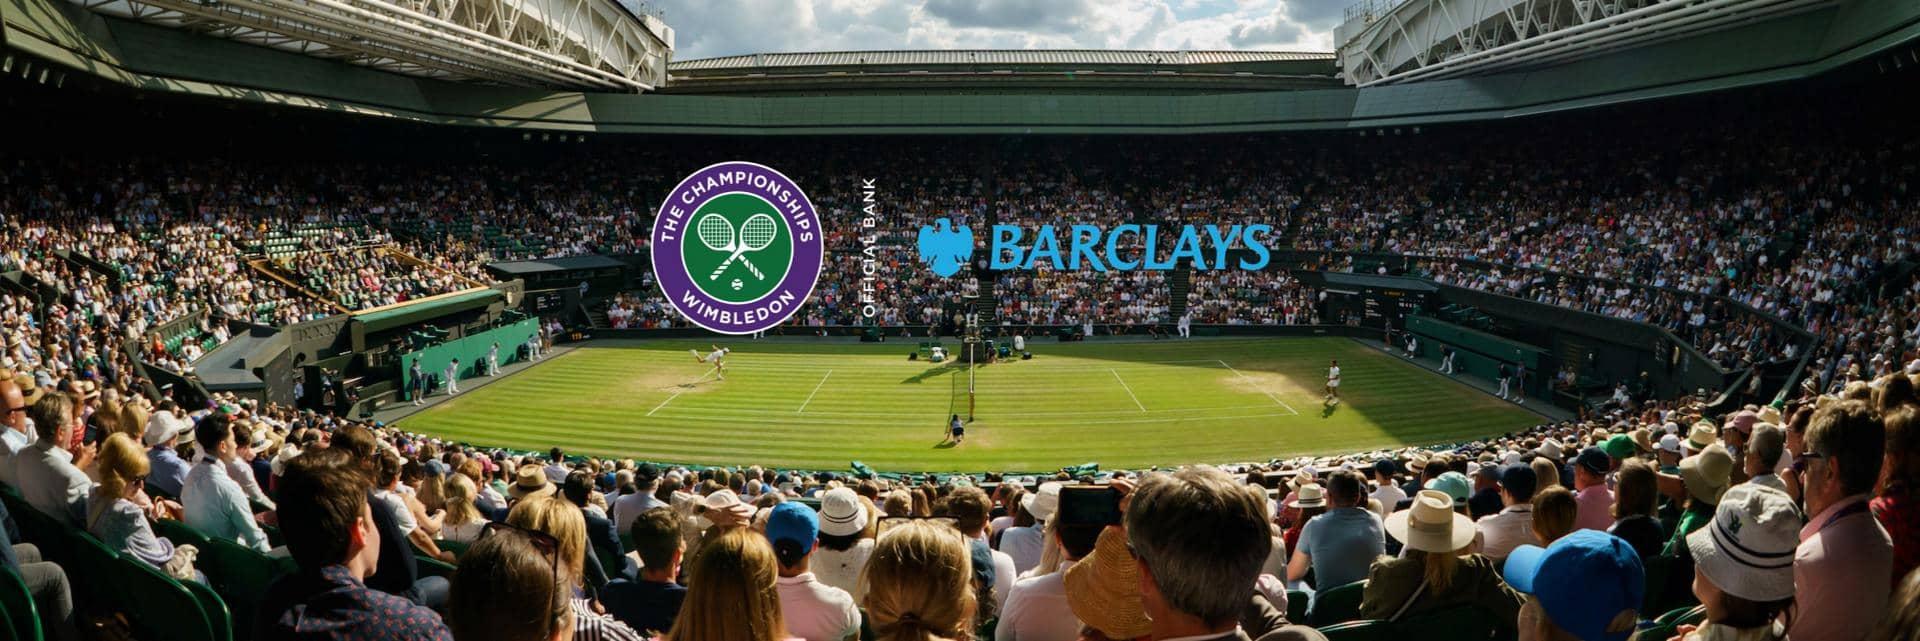 Barclays and Wimbledon/u200b Barclays